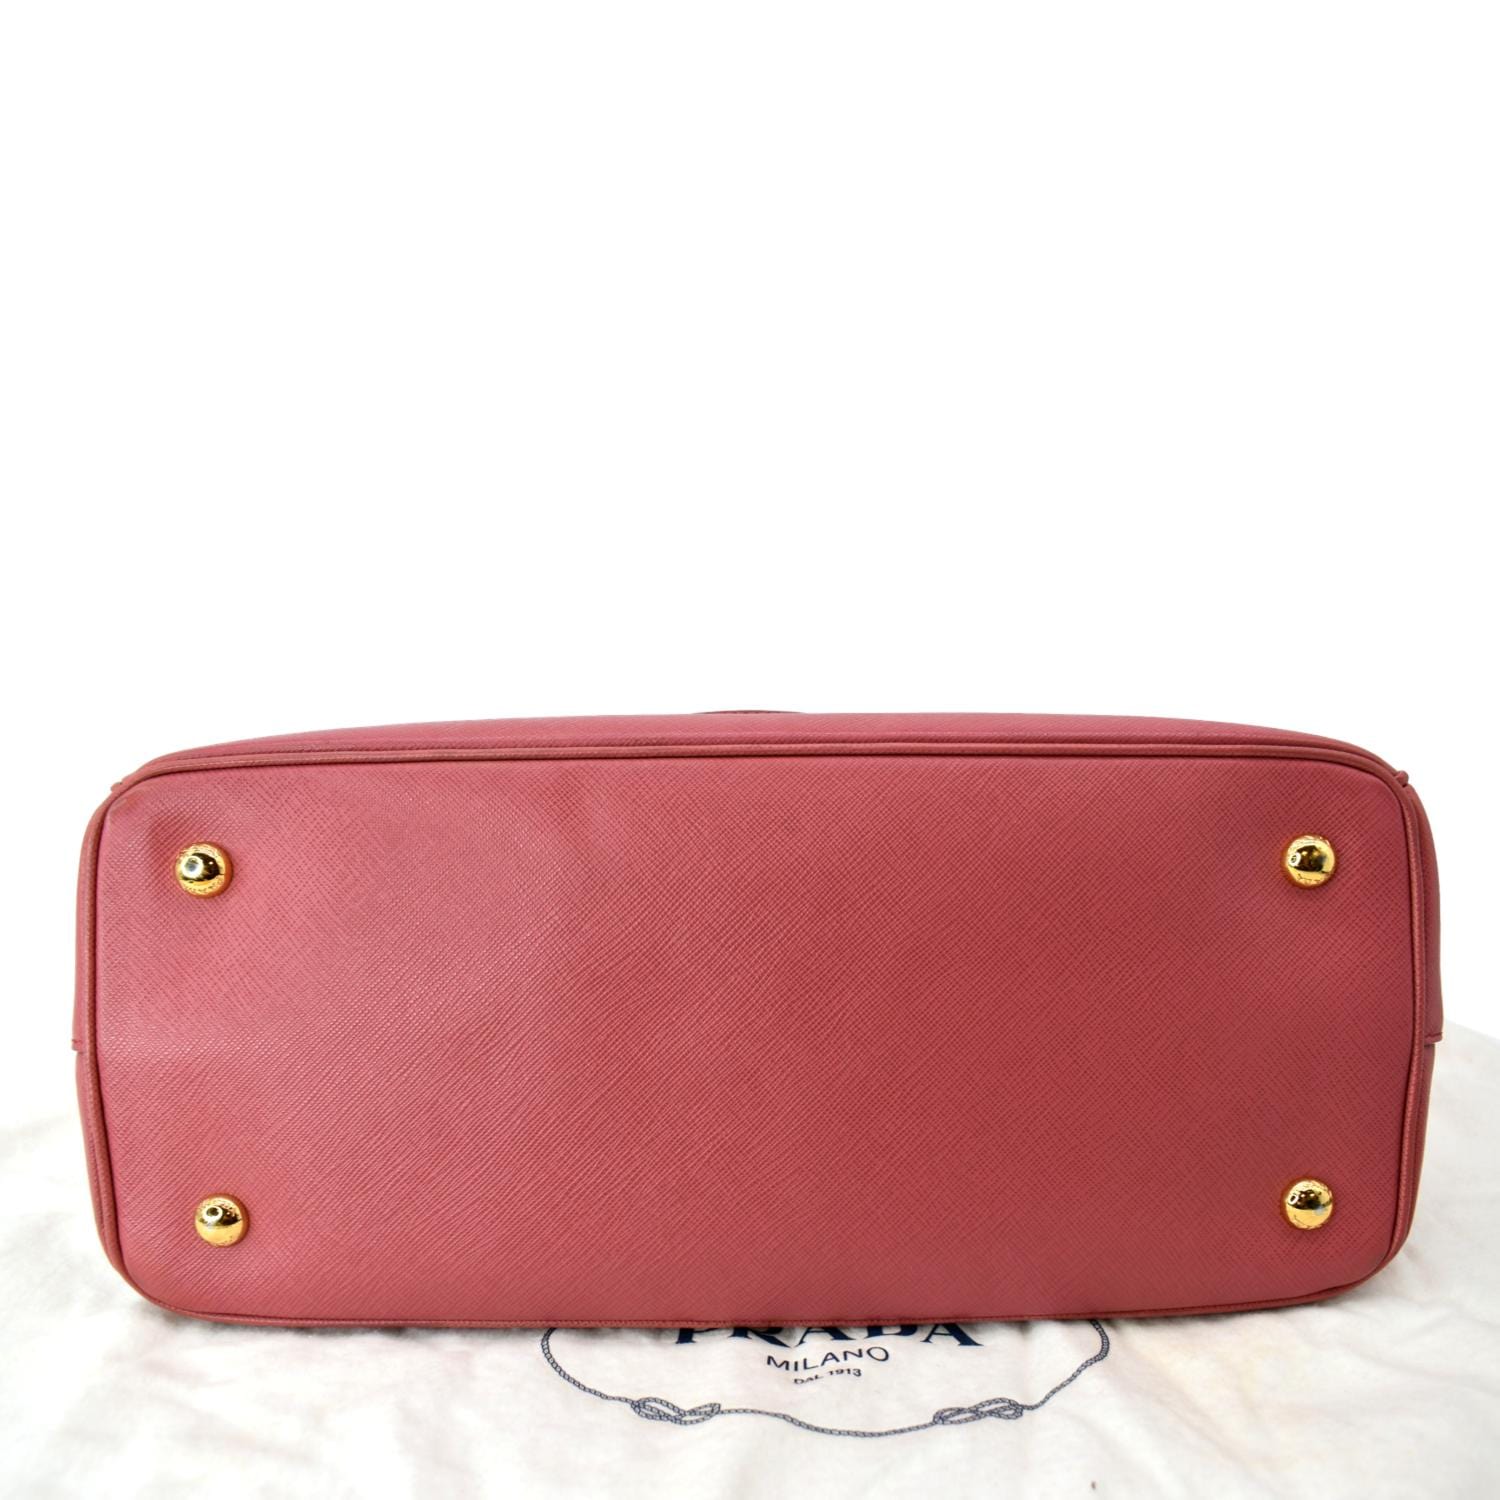 Prada Prada, Galleria tote bag in red saffiano leather.